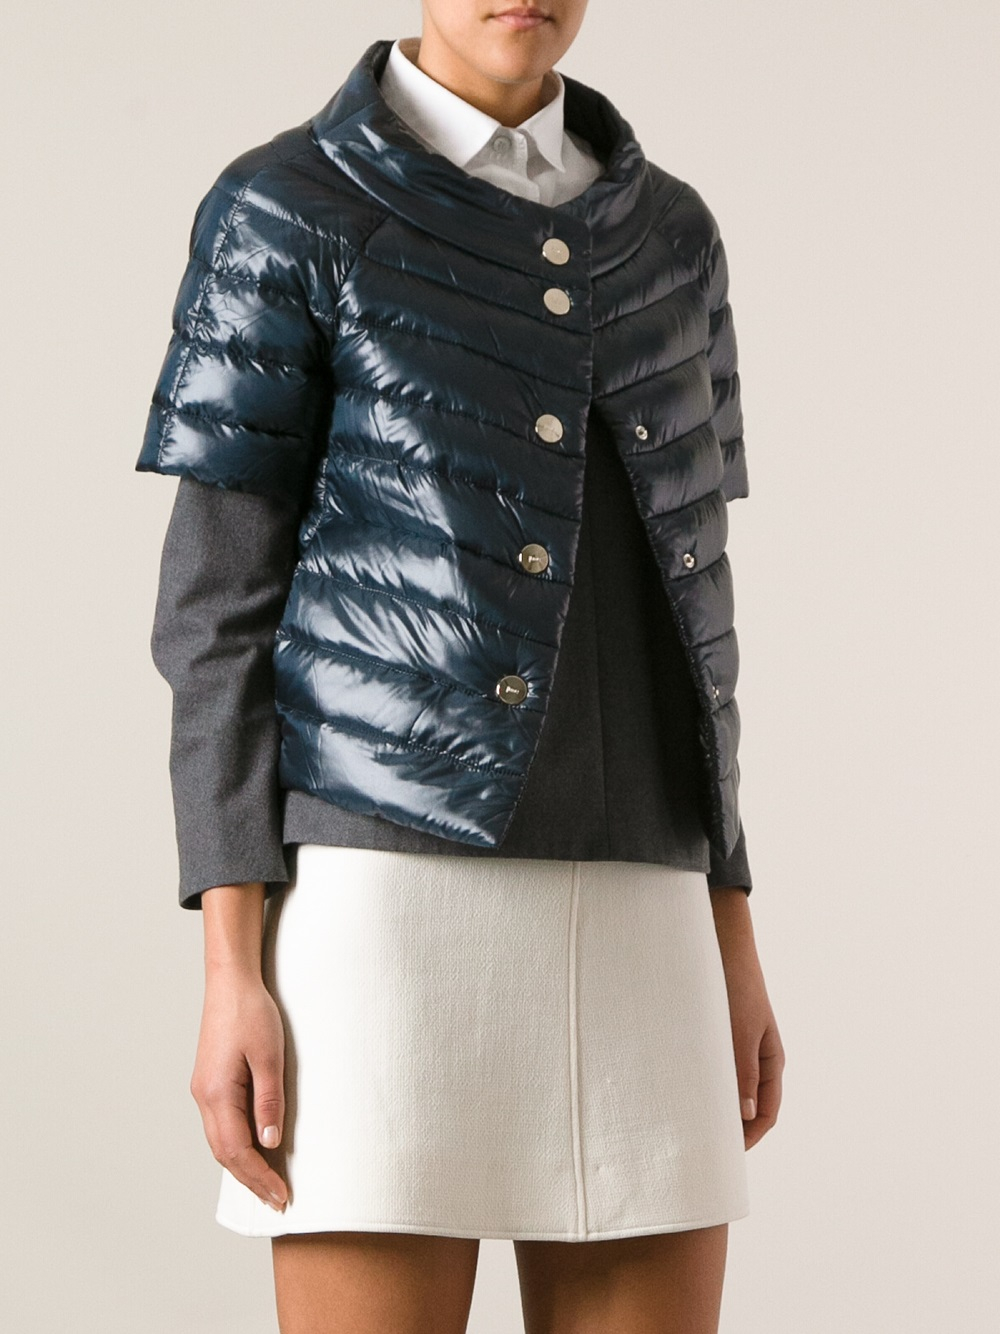 Lyst - Herno Short Sleeve Jacket in Blue